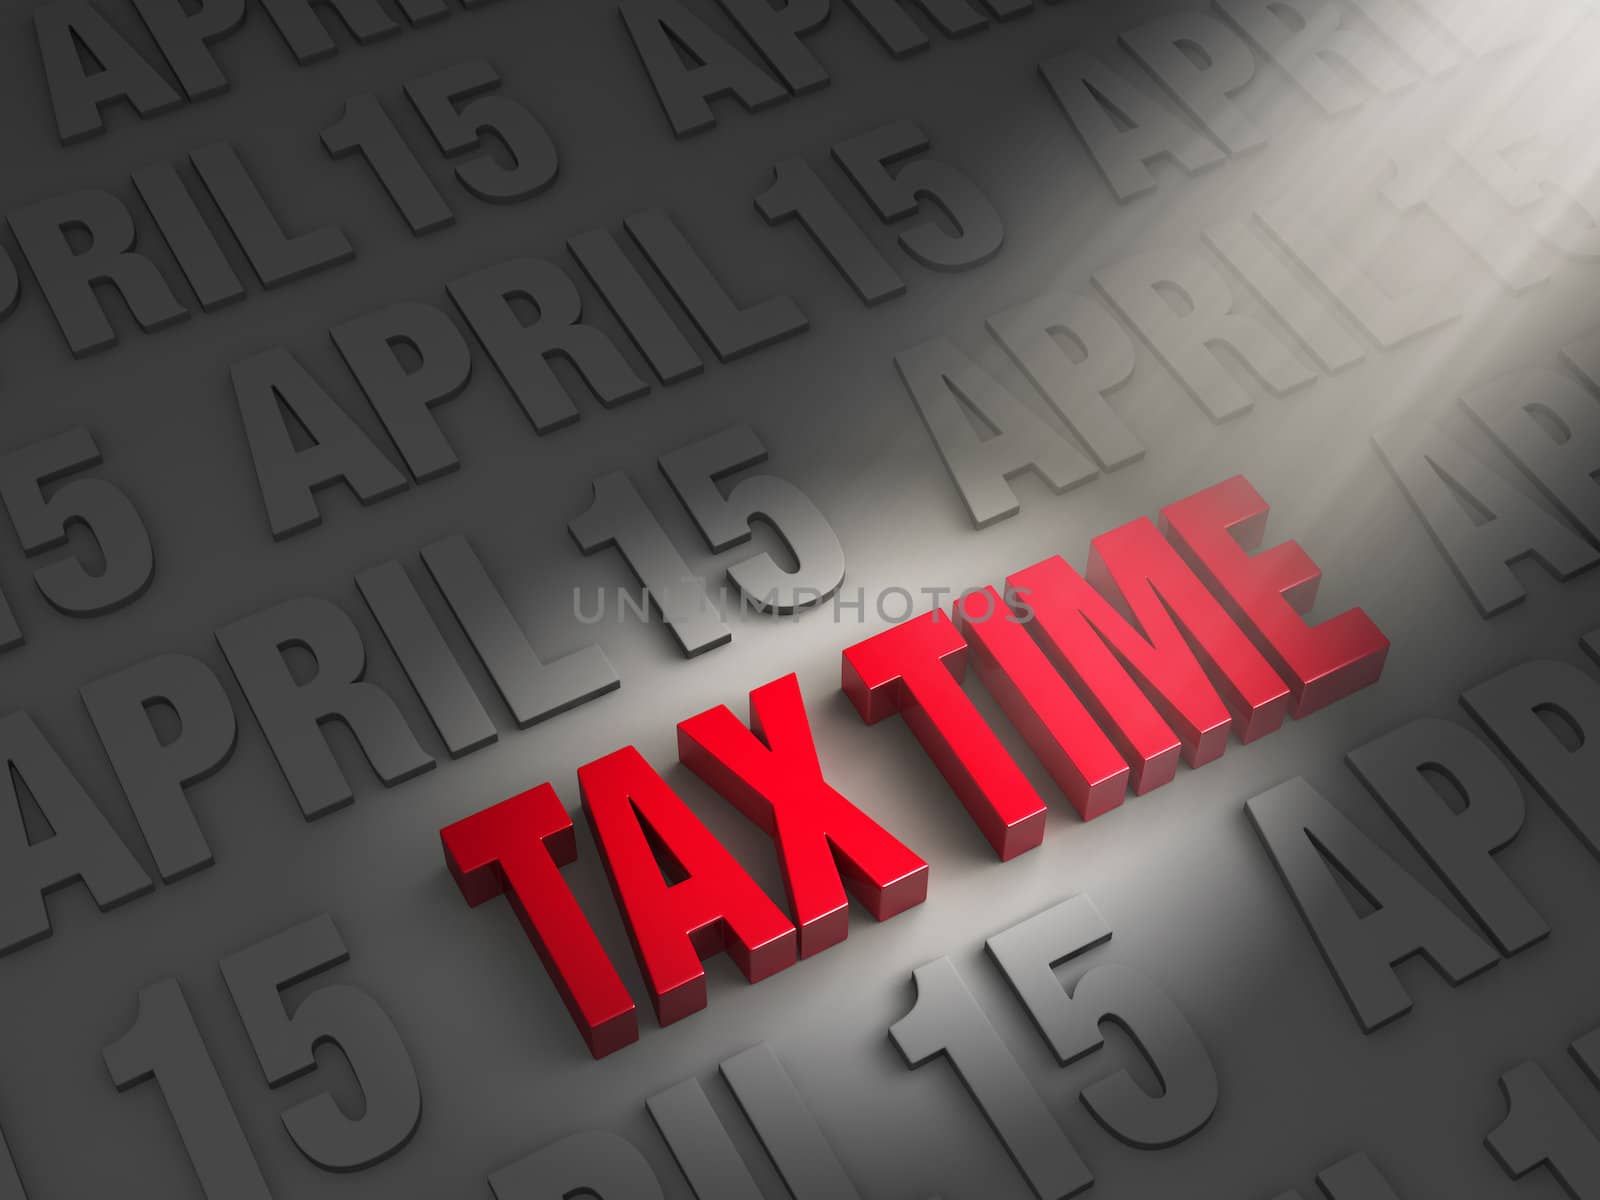 Shinning a Light On Tax Time by Em3